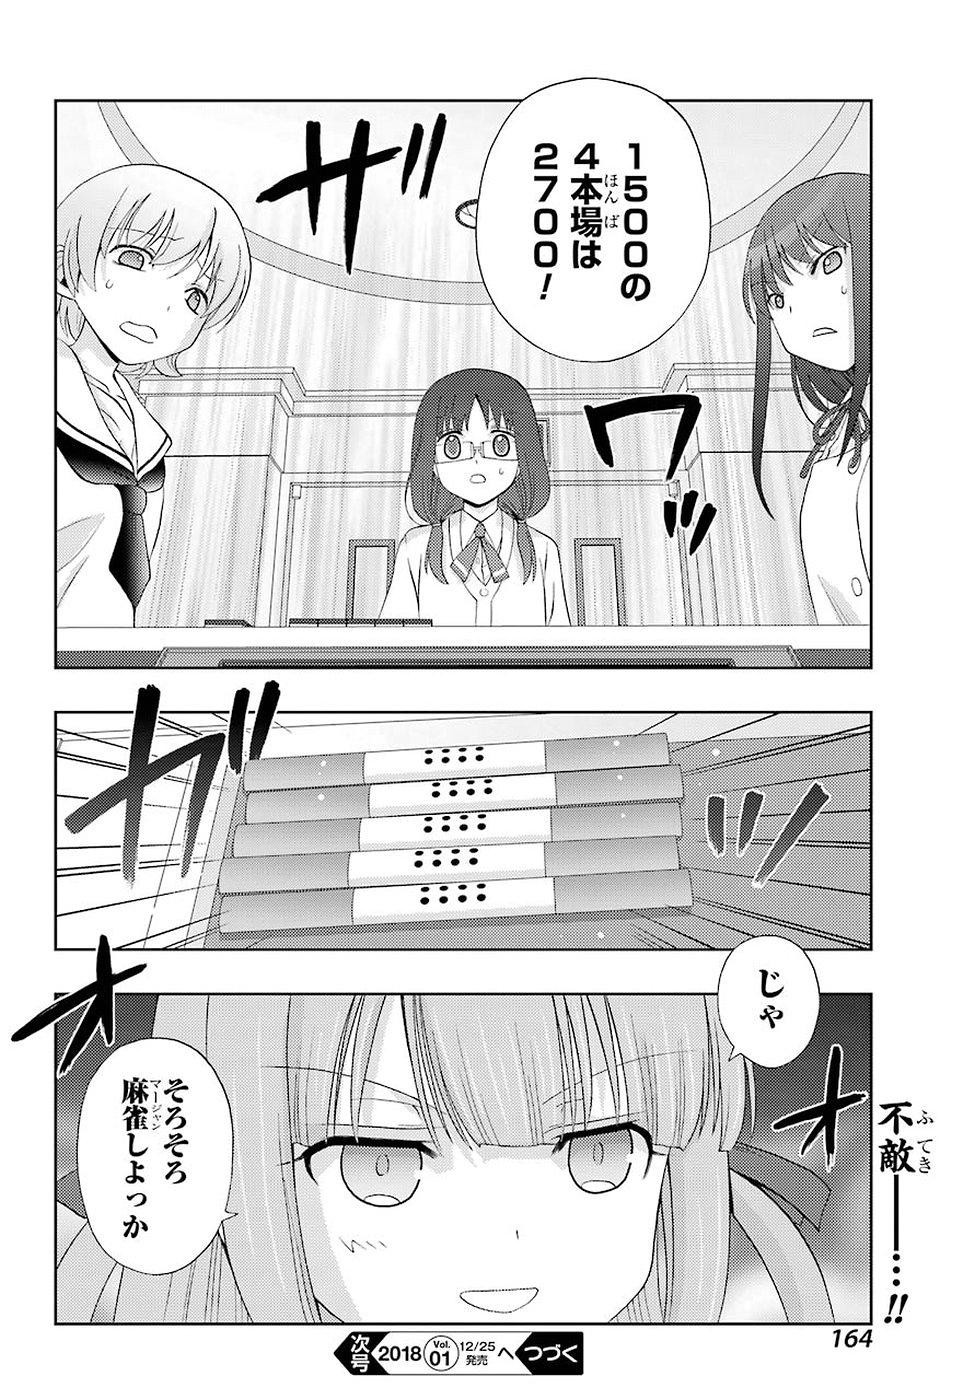 Shinohayu - The Dawn of Age Manga - Chapter 051 - Page 24